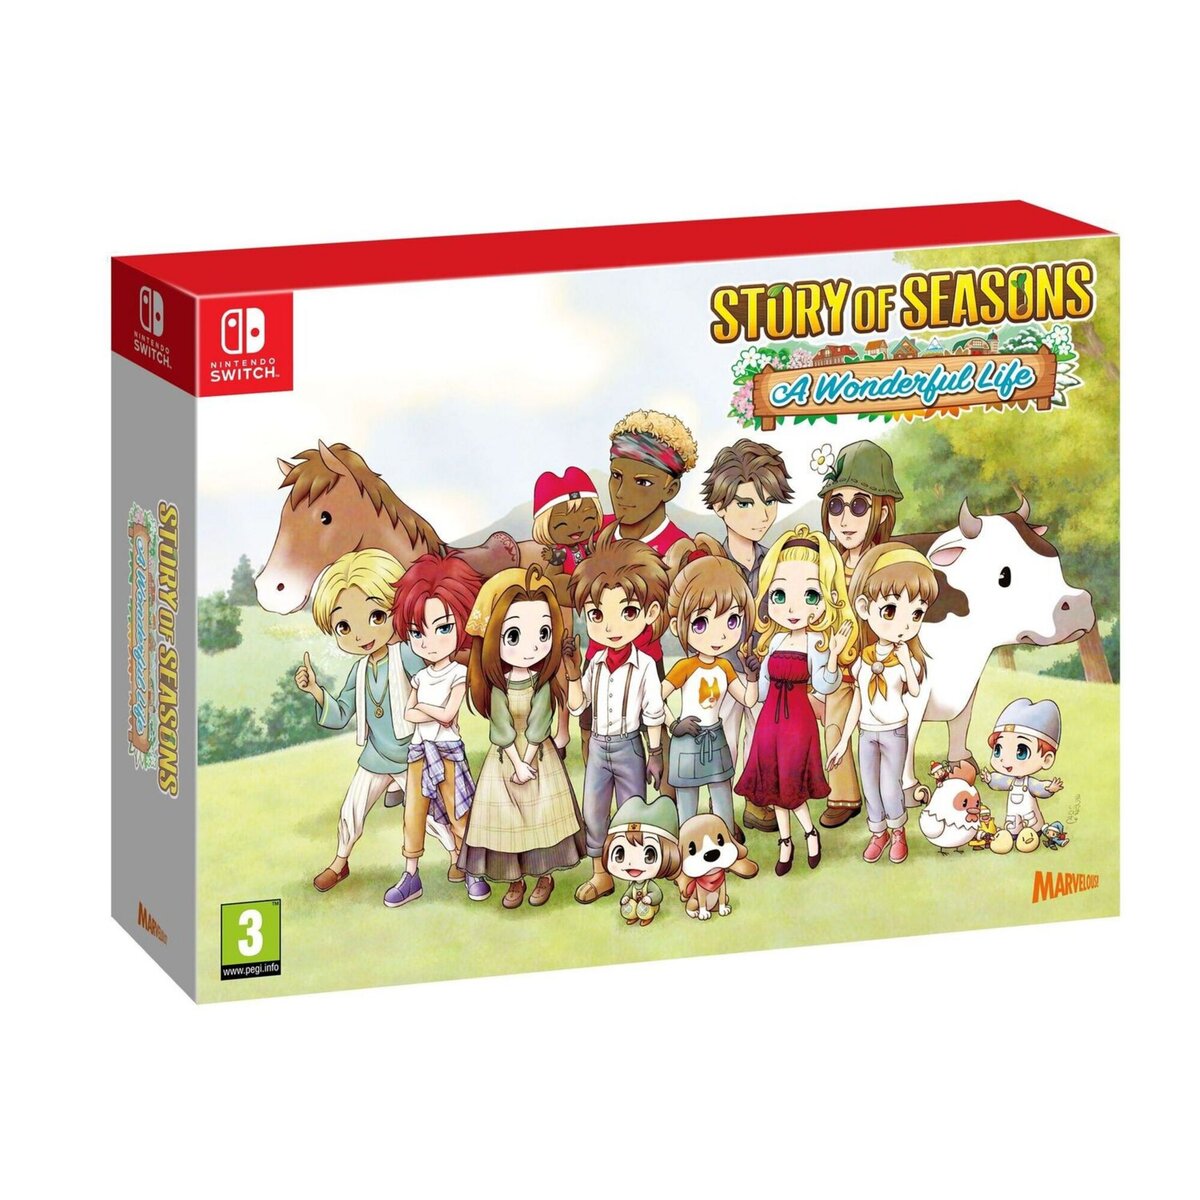 Story of Seasons: A Wonderful Life - Limited Edition Nintendo Switch